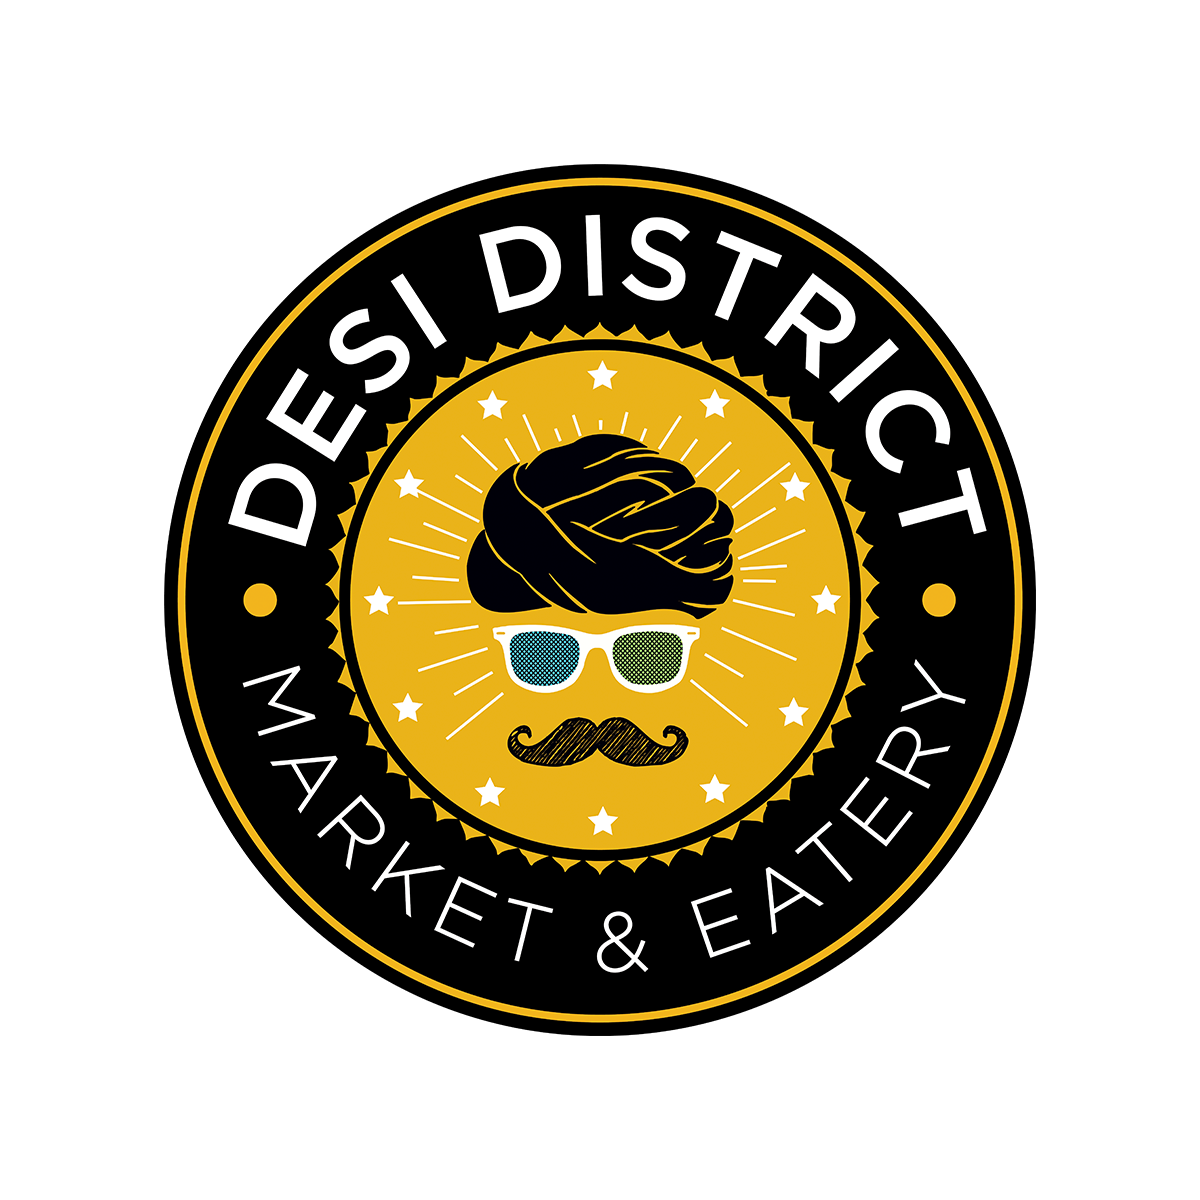 Desi District careers